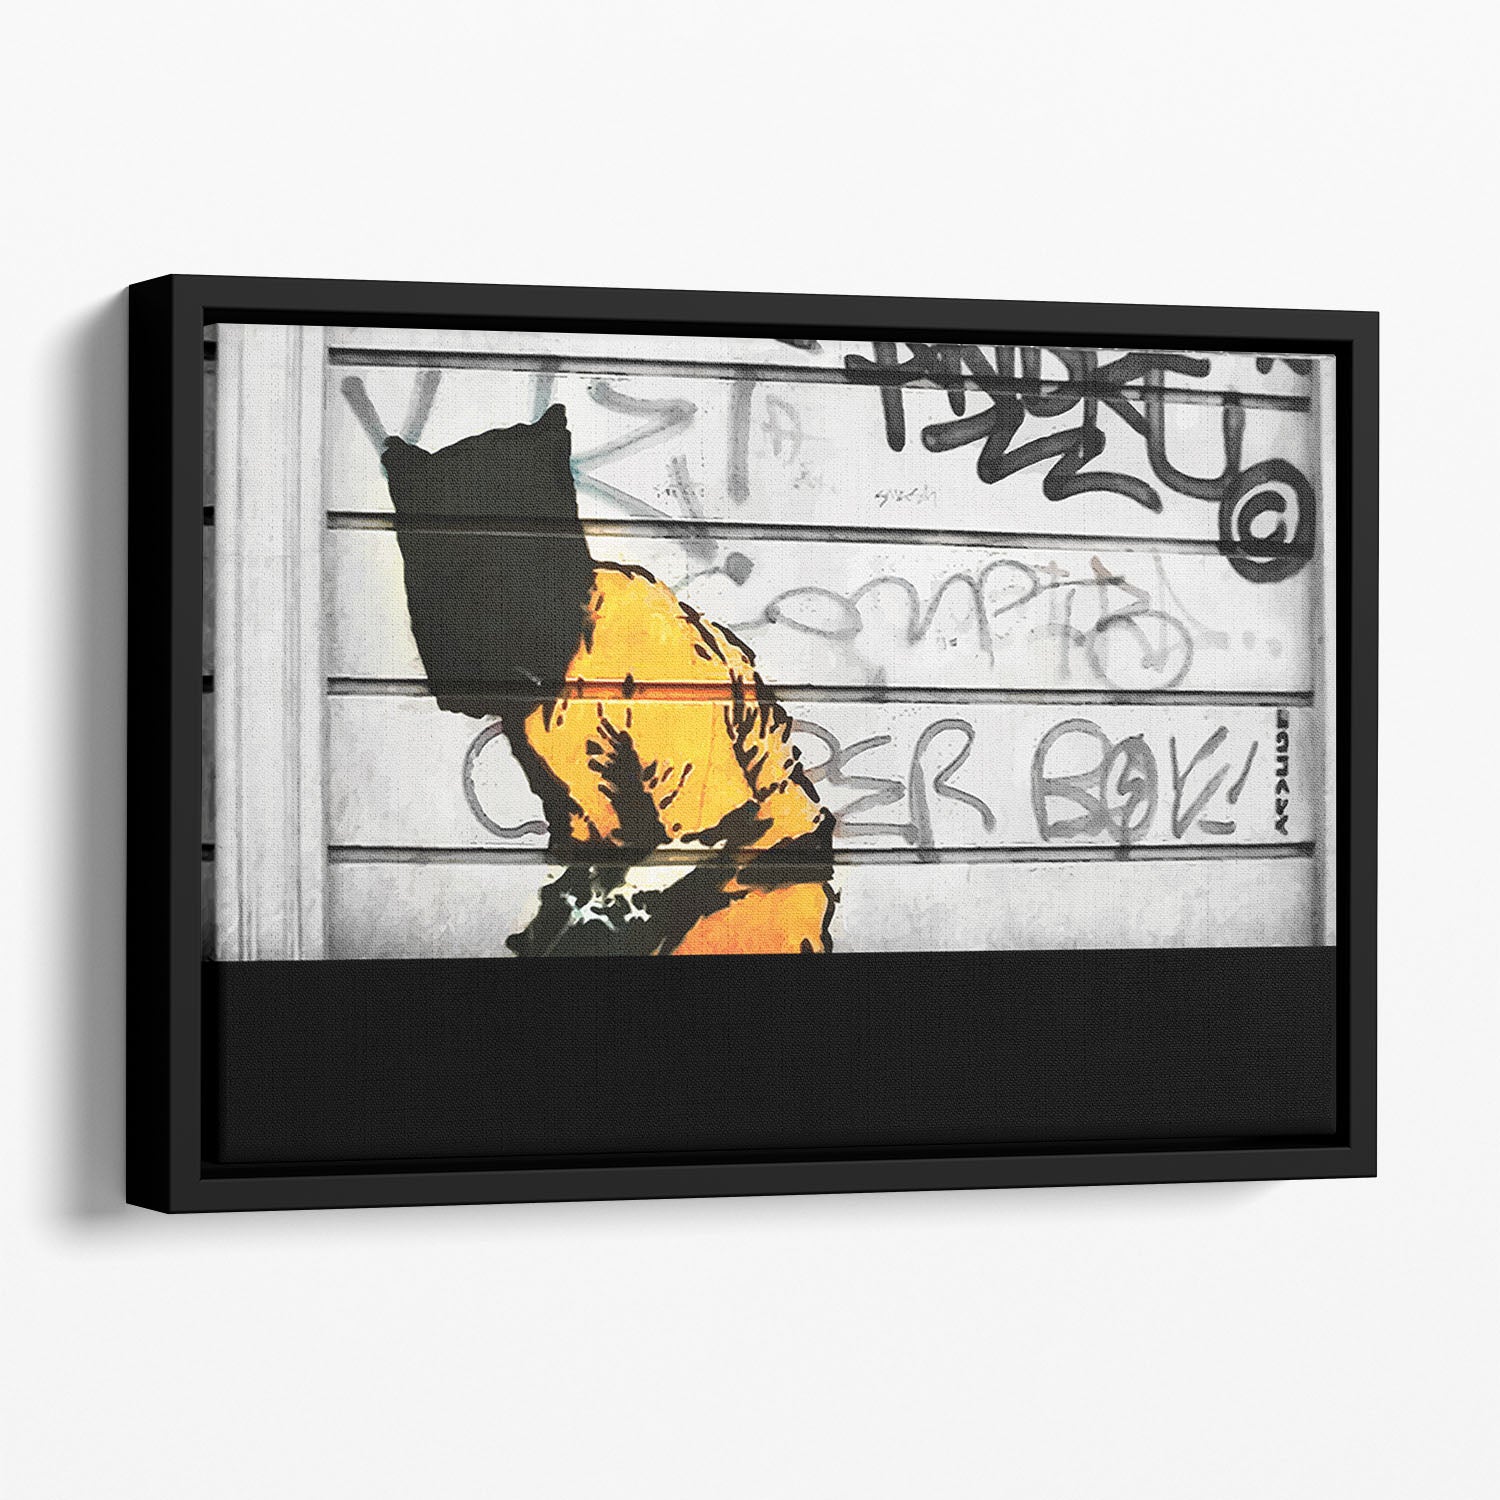 Banksy Guantanamo Bay Detainee Floating Framed Canvas - Canvas Art Rocks - 1